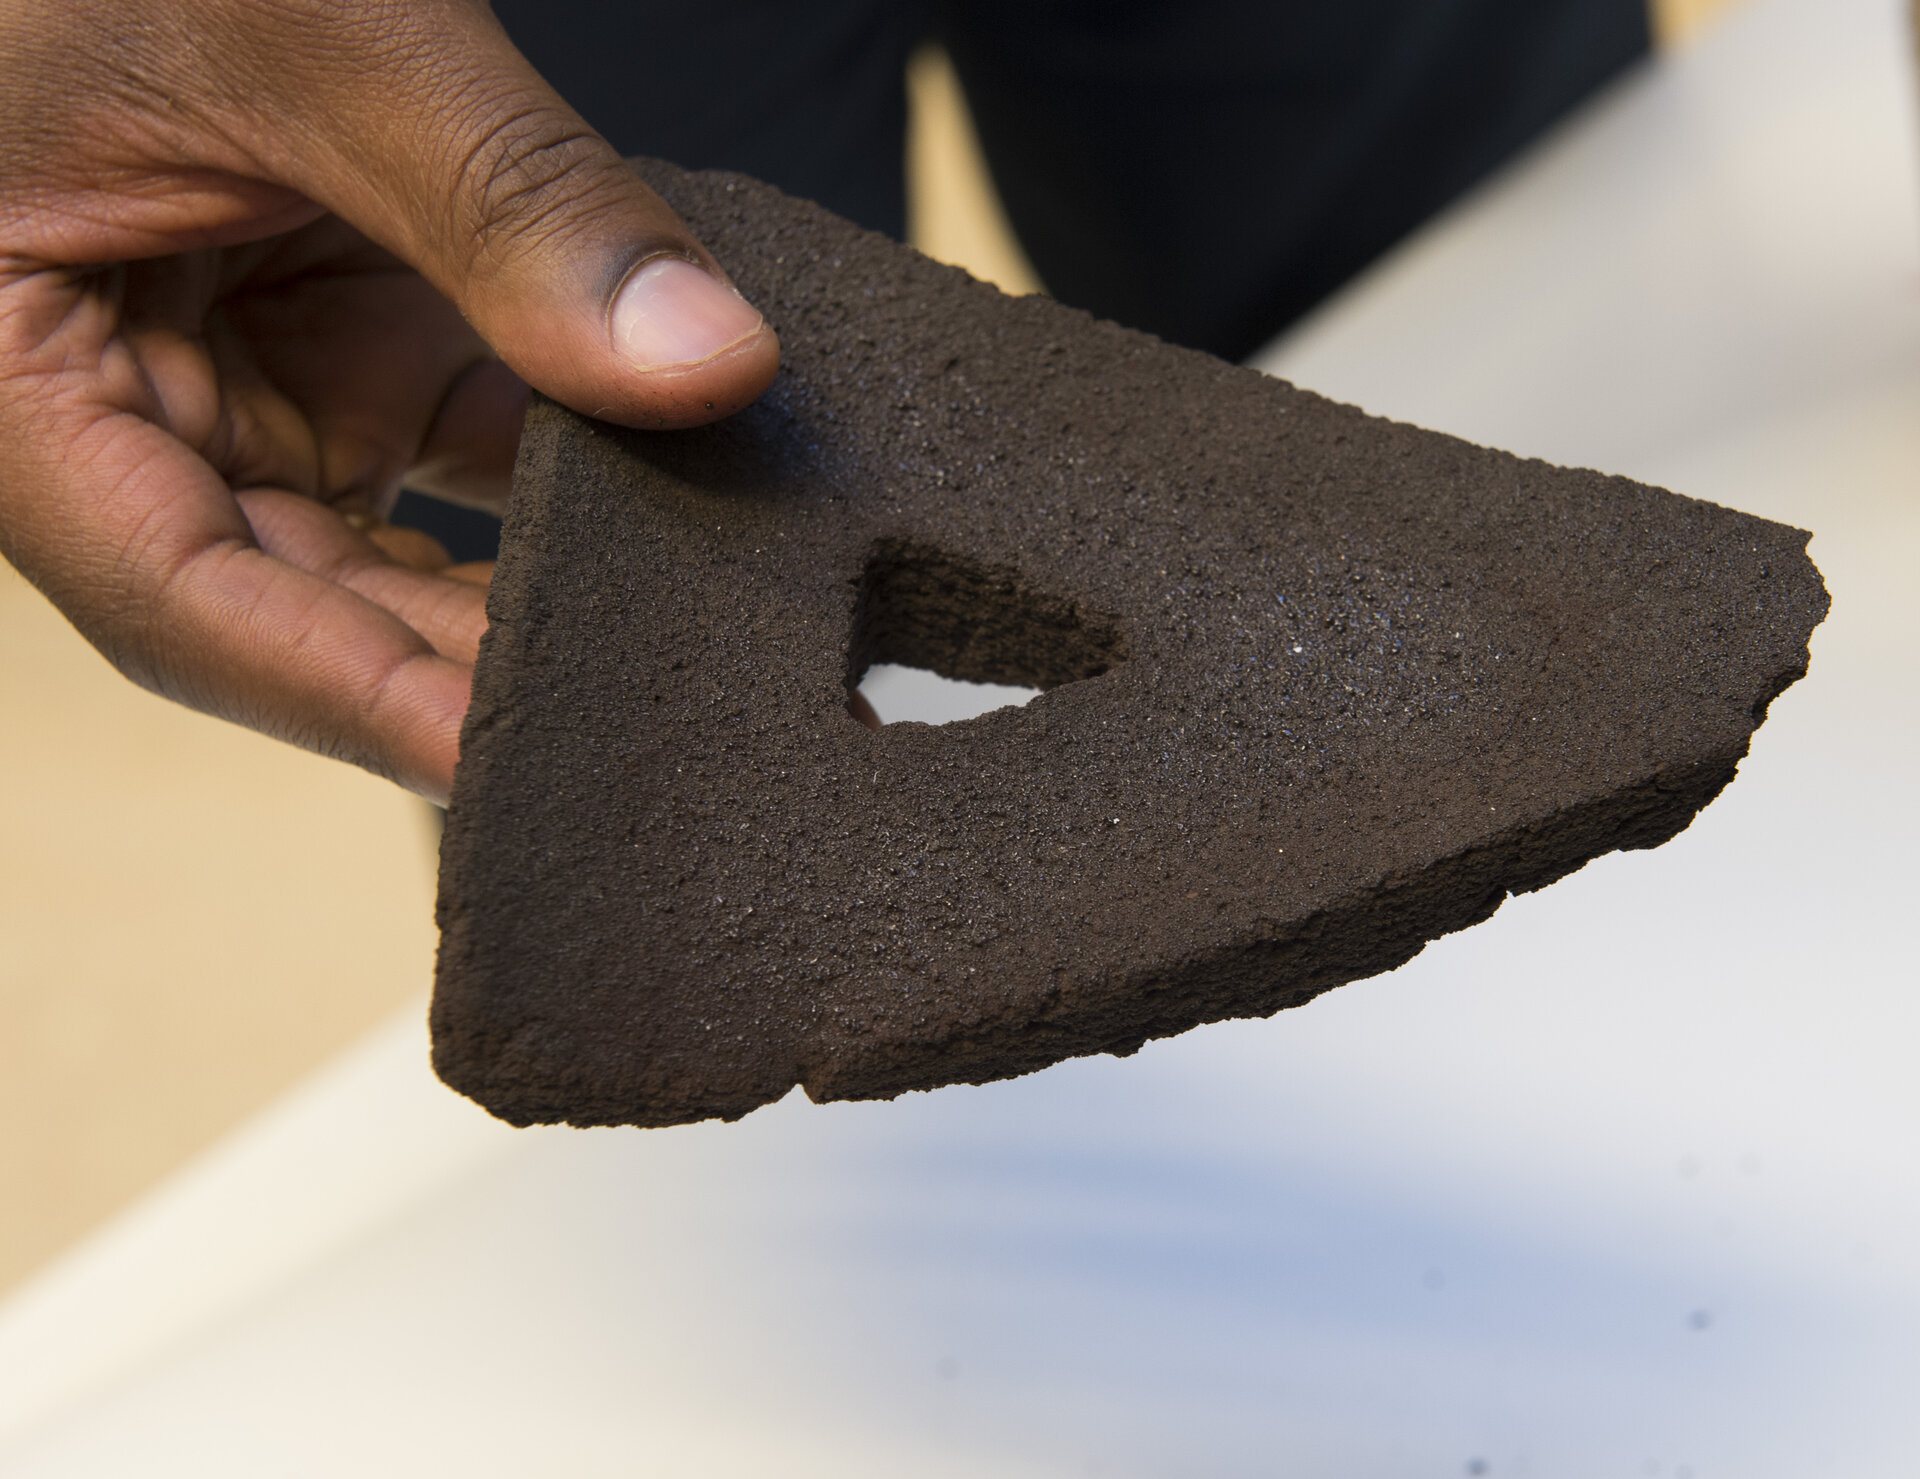 Brick 3D printed from moondust using focused sunlight